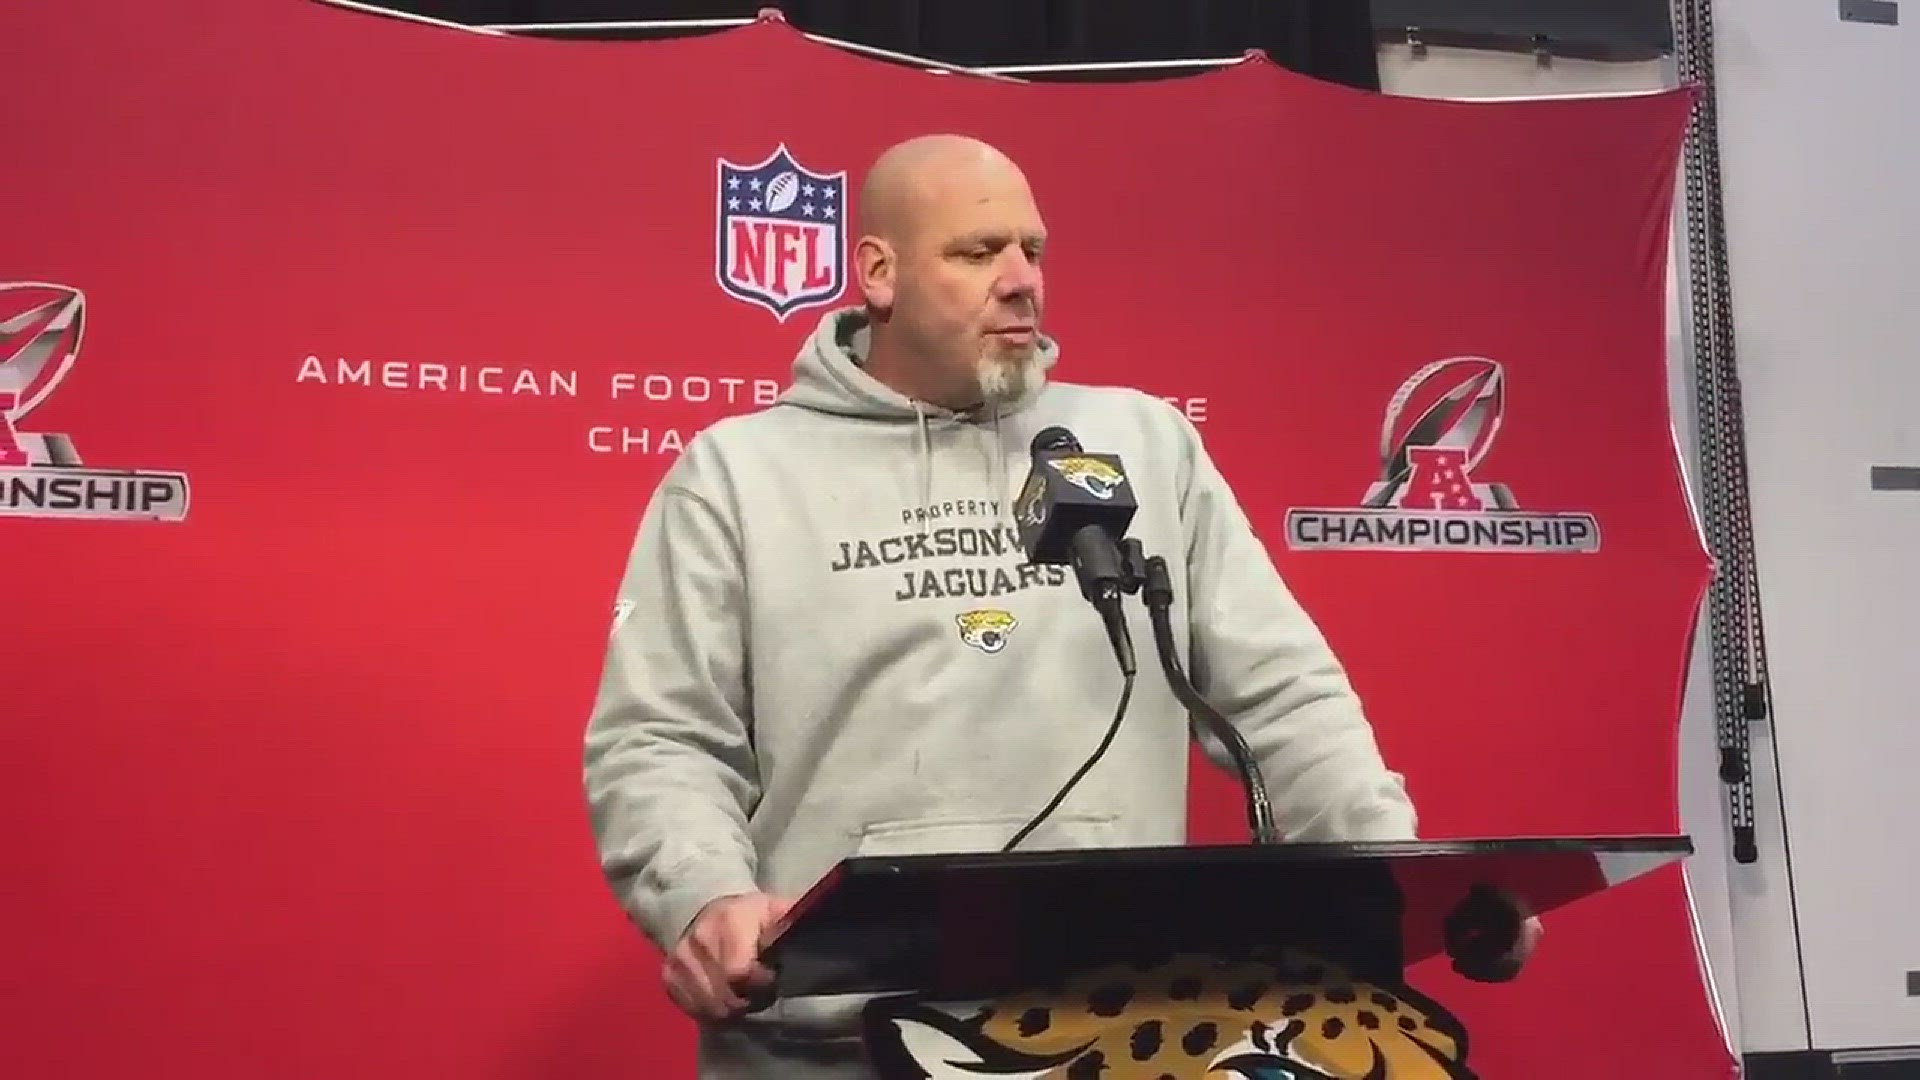 Jaguars defensive coordinator Todd Wash talks about pressuring Patriots QB Tom Brady